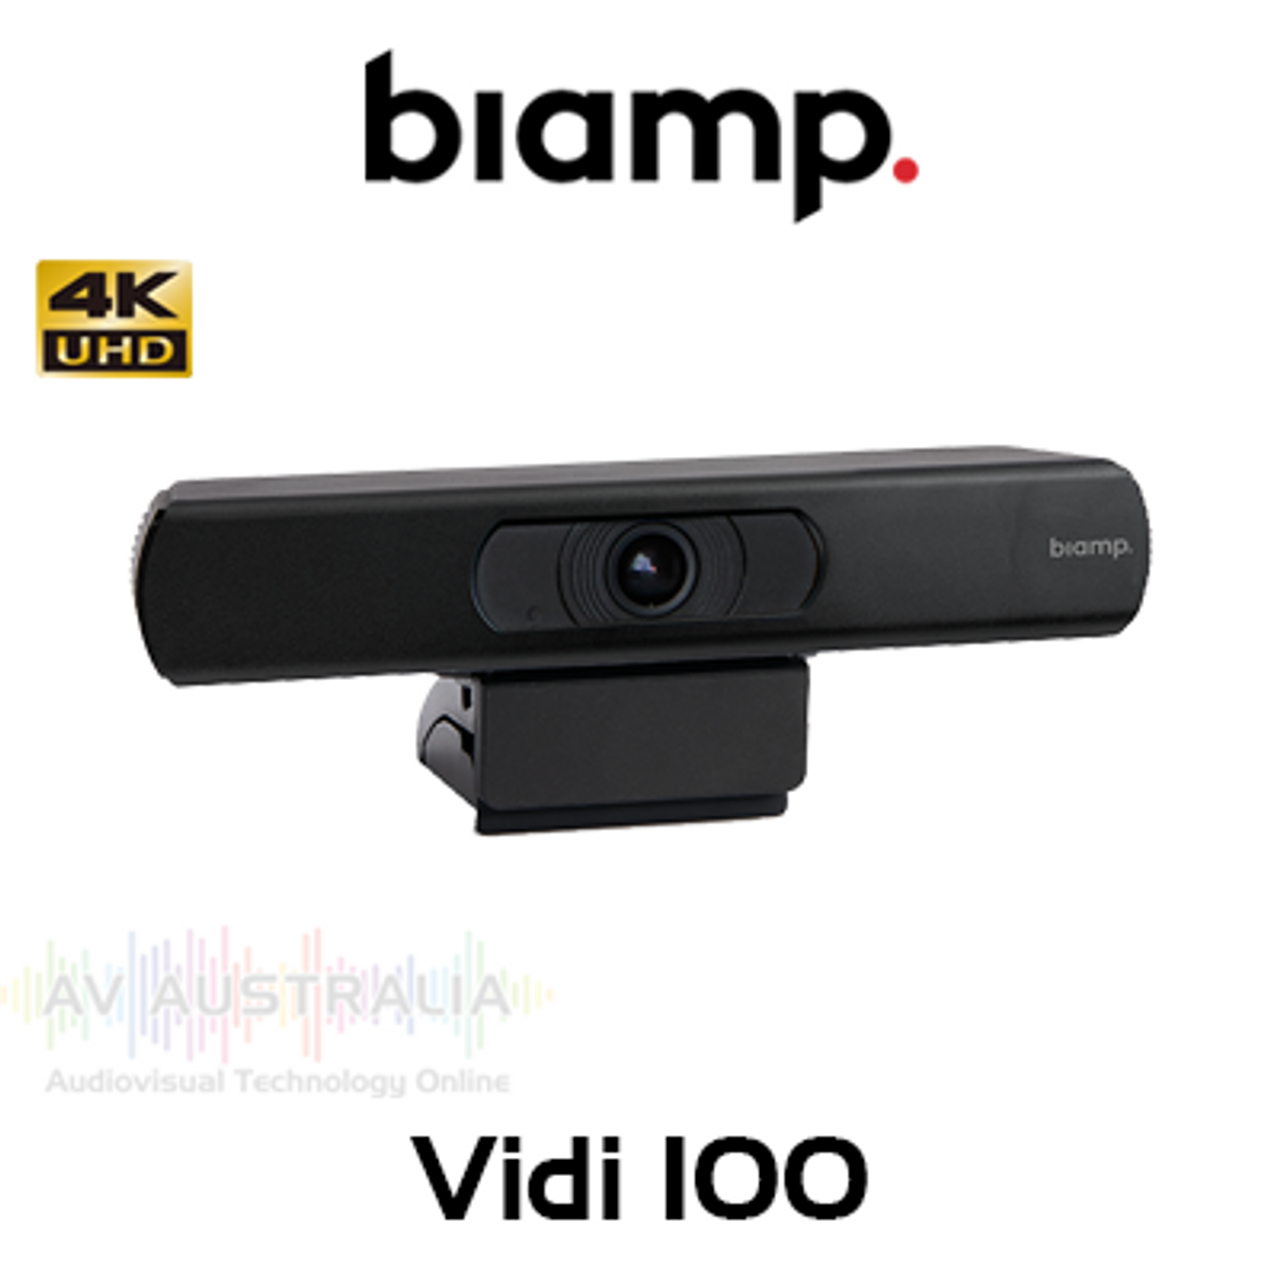 Biamp Vidi 100 4K 120-Degree FOV Video Conferencing Camera